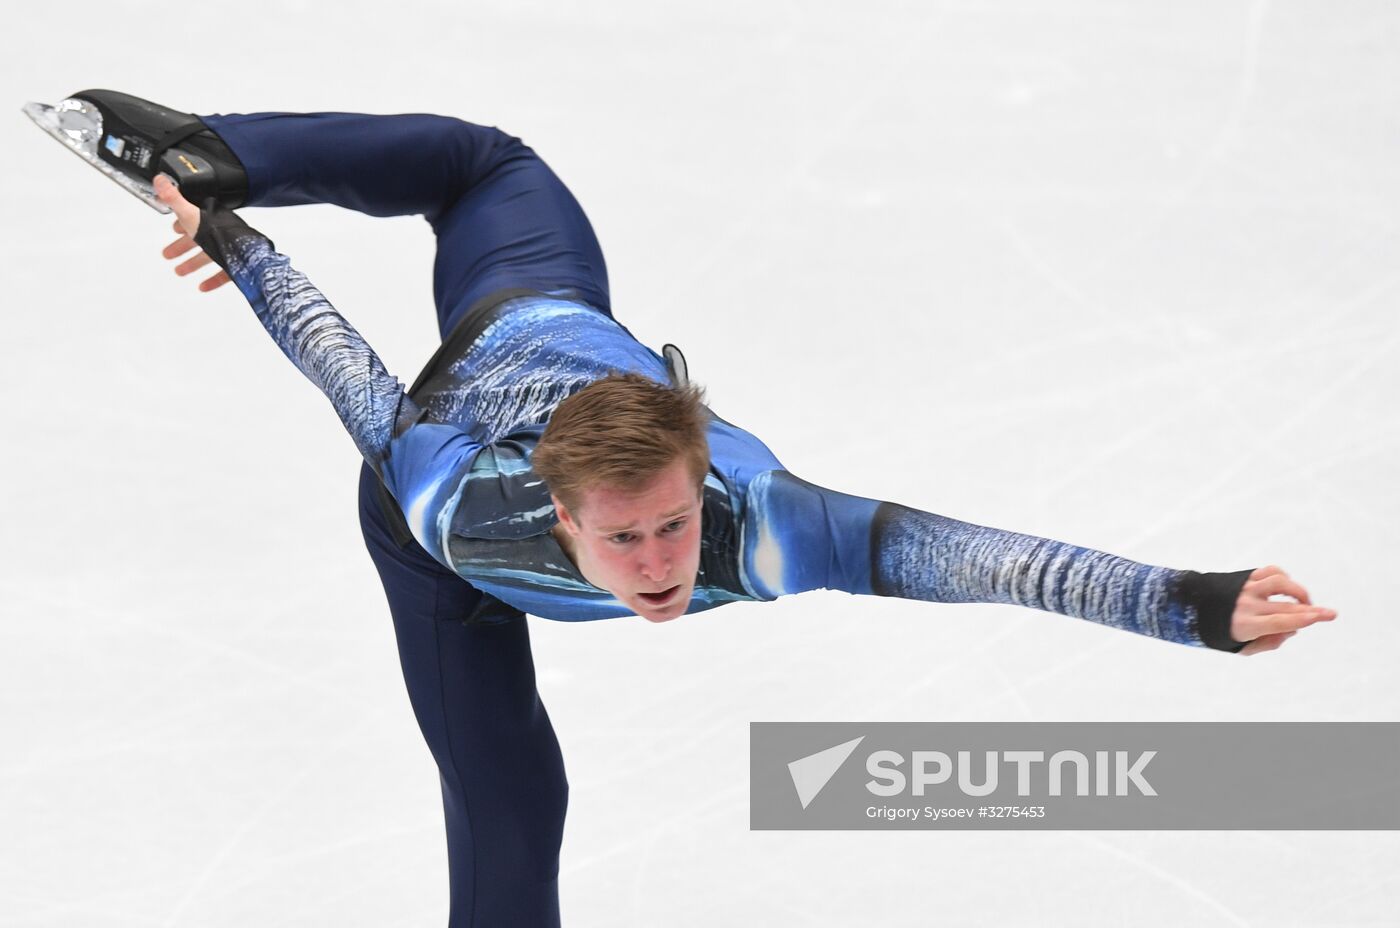 European Figure Skating Championships. Men's short program